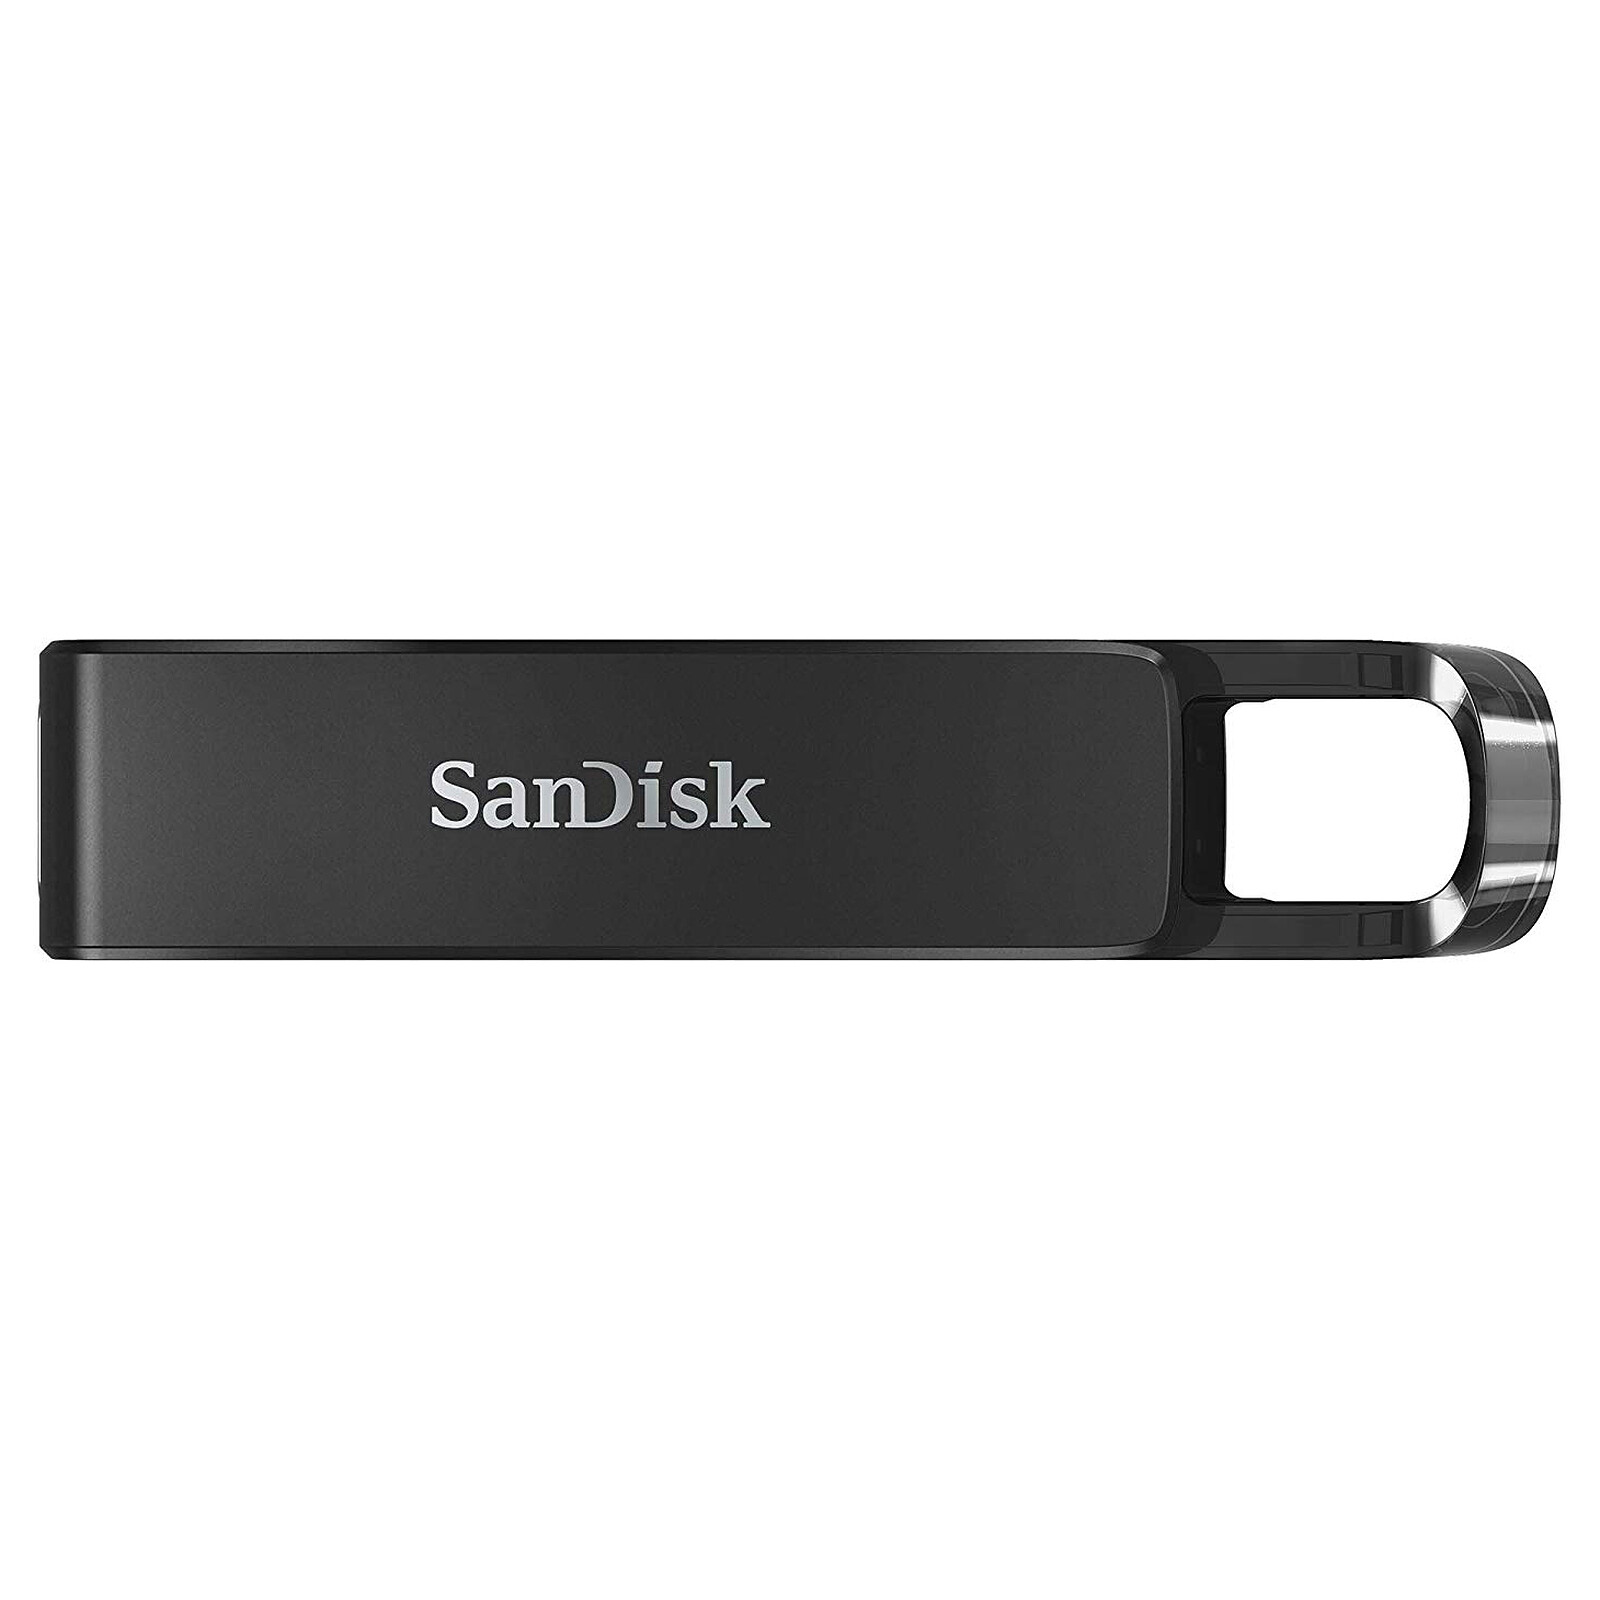 Clé USB SanDisk Ultra Shift